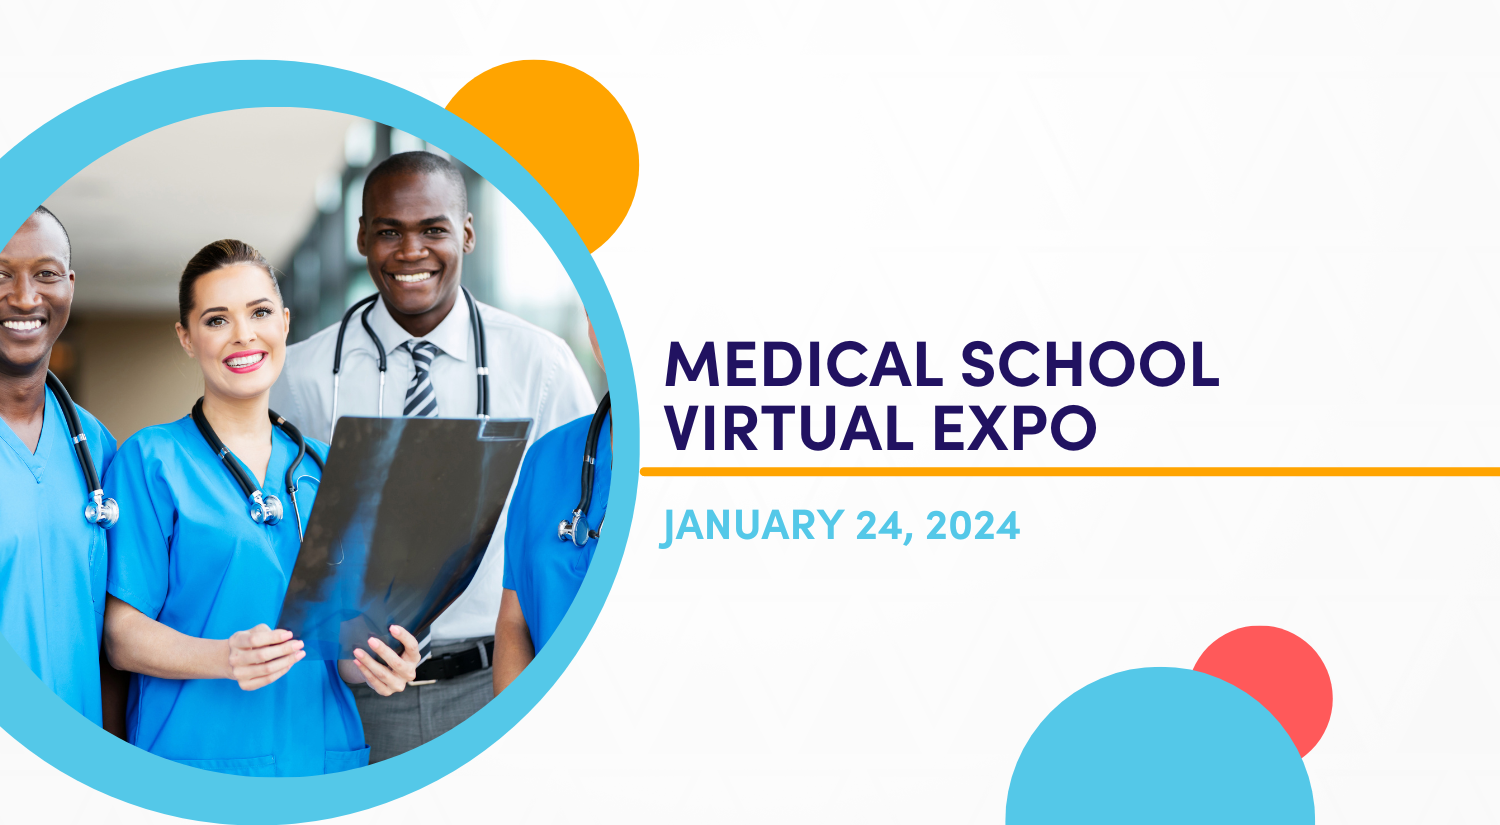 Medcial School Virtual Expo, January 24, 2024